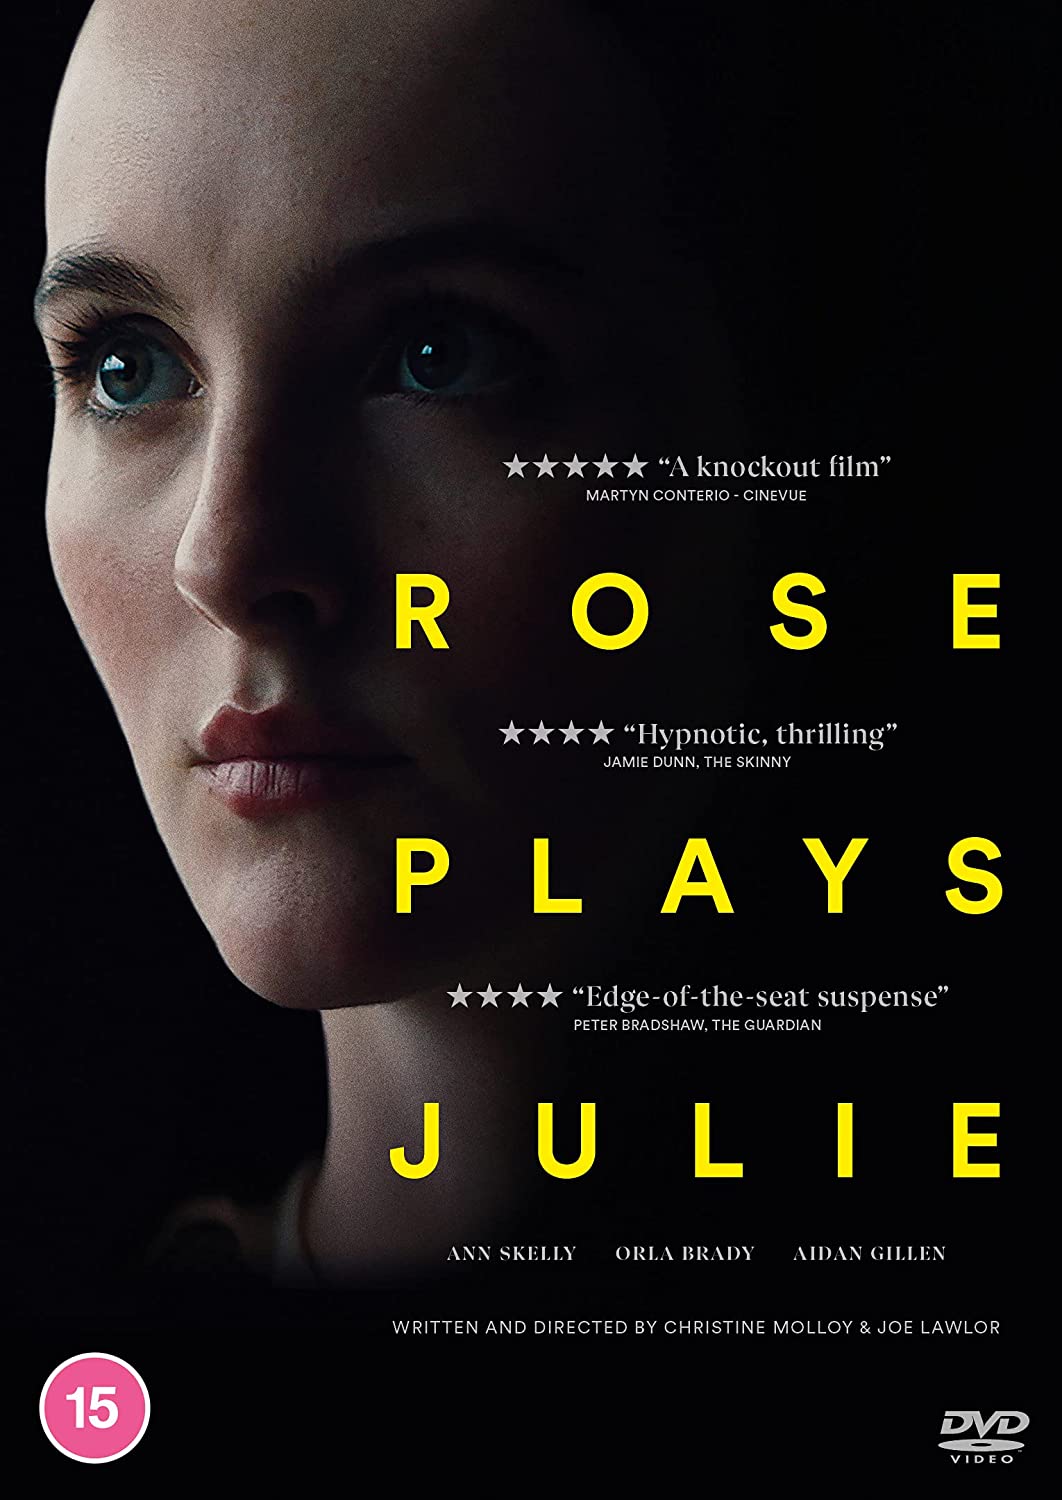 Rose plays Julie -  Drama/Thriller  [DVD]